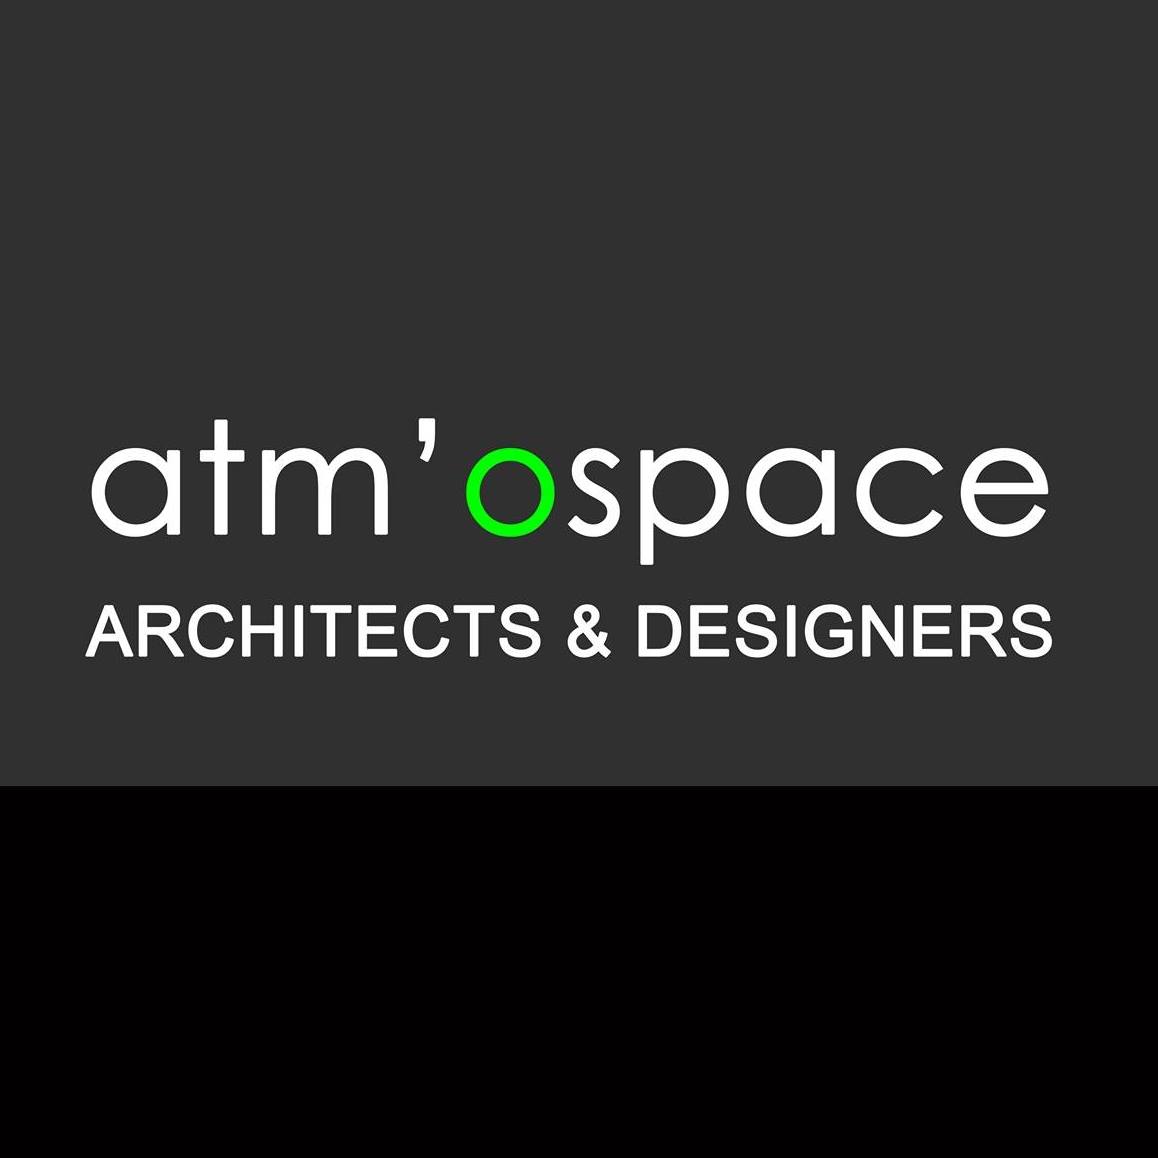 apm'ospace - Logo